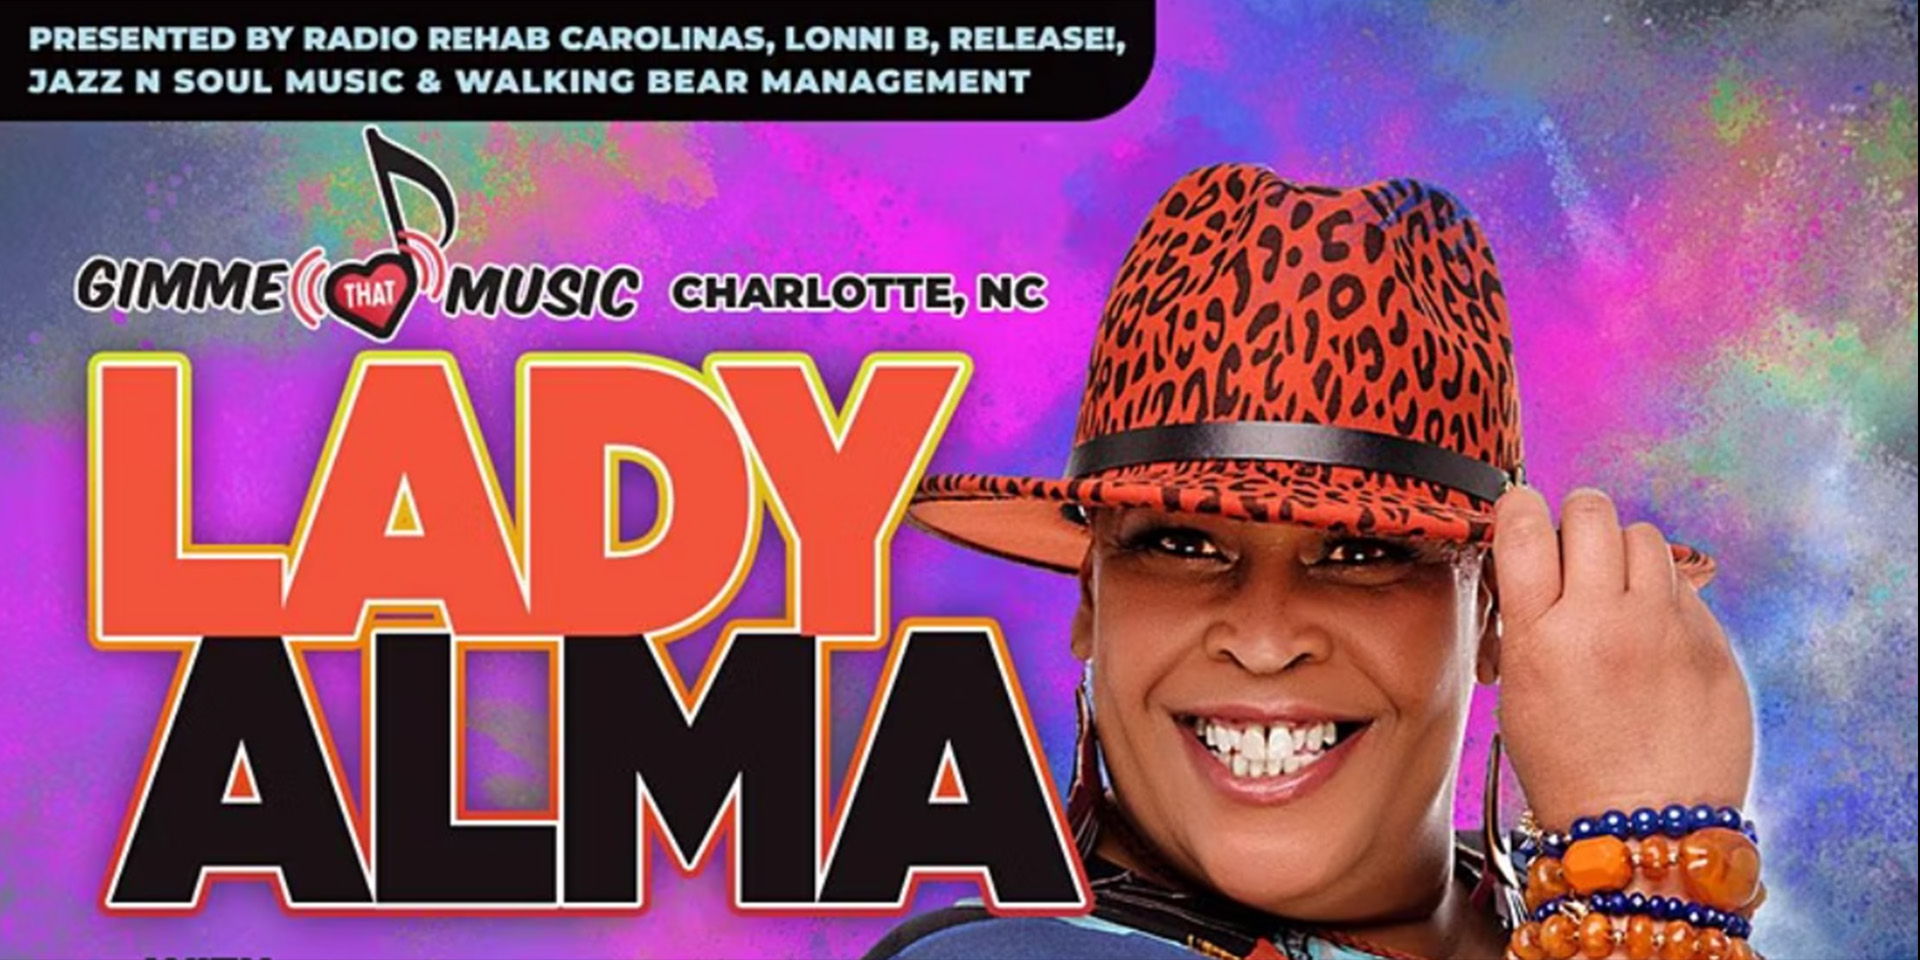 Gimme That Music CLT w/ Lady Alma & Legendary DJ Marley Marl promotional image